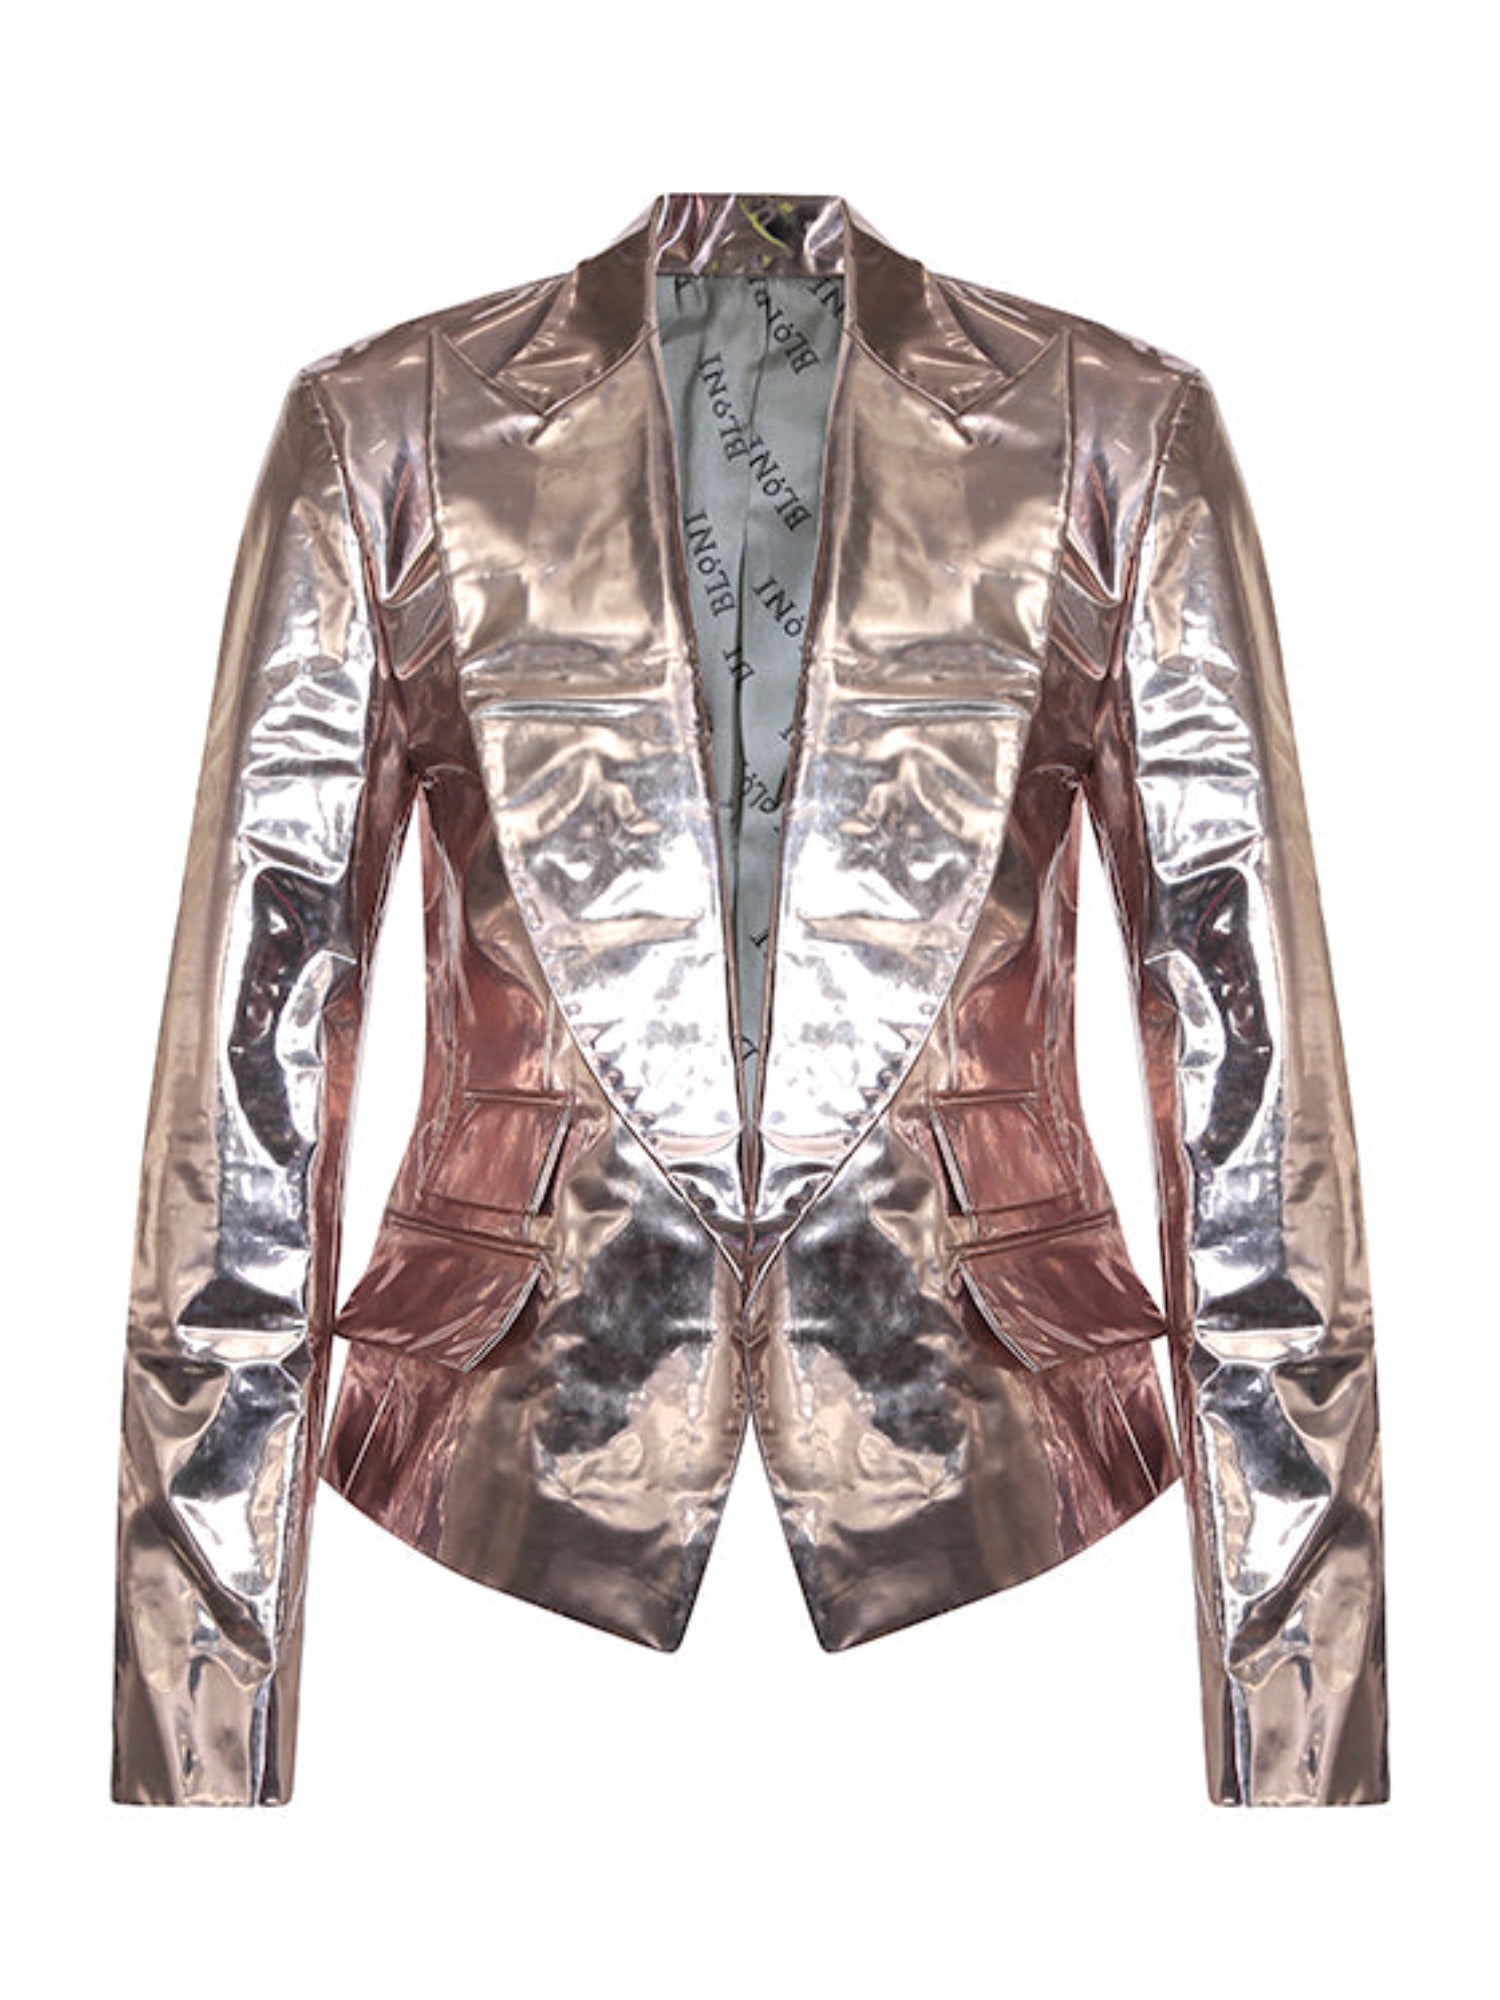 Copper-pink metallic vegan leather jacket